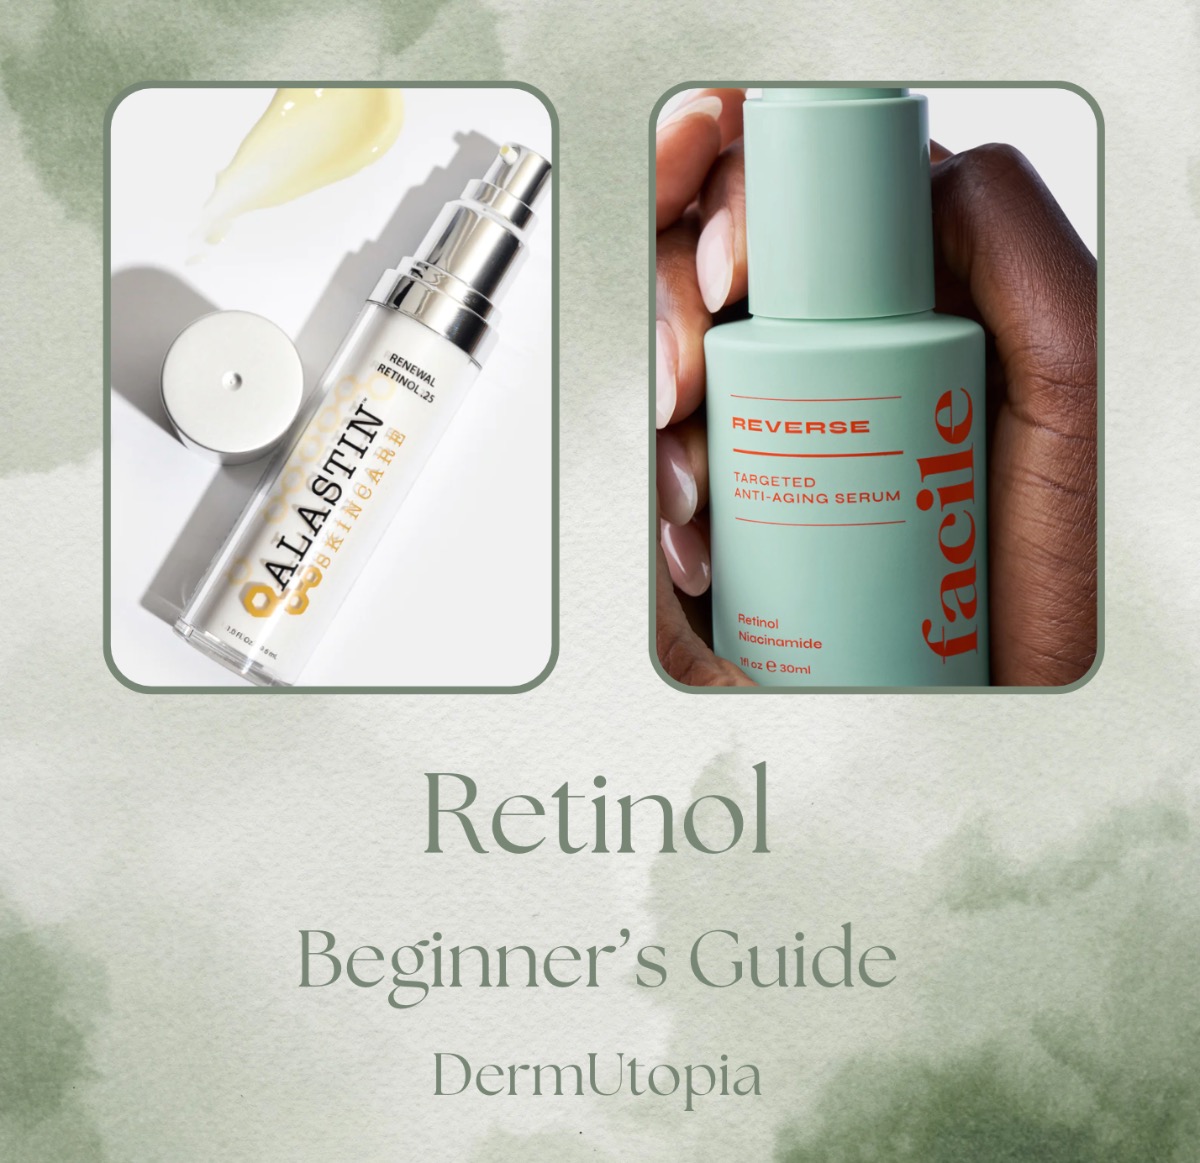 DermUtopia’s Guide to Retinol